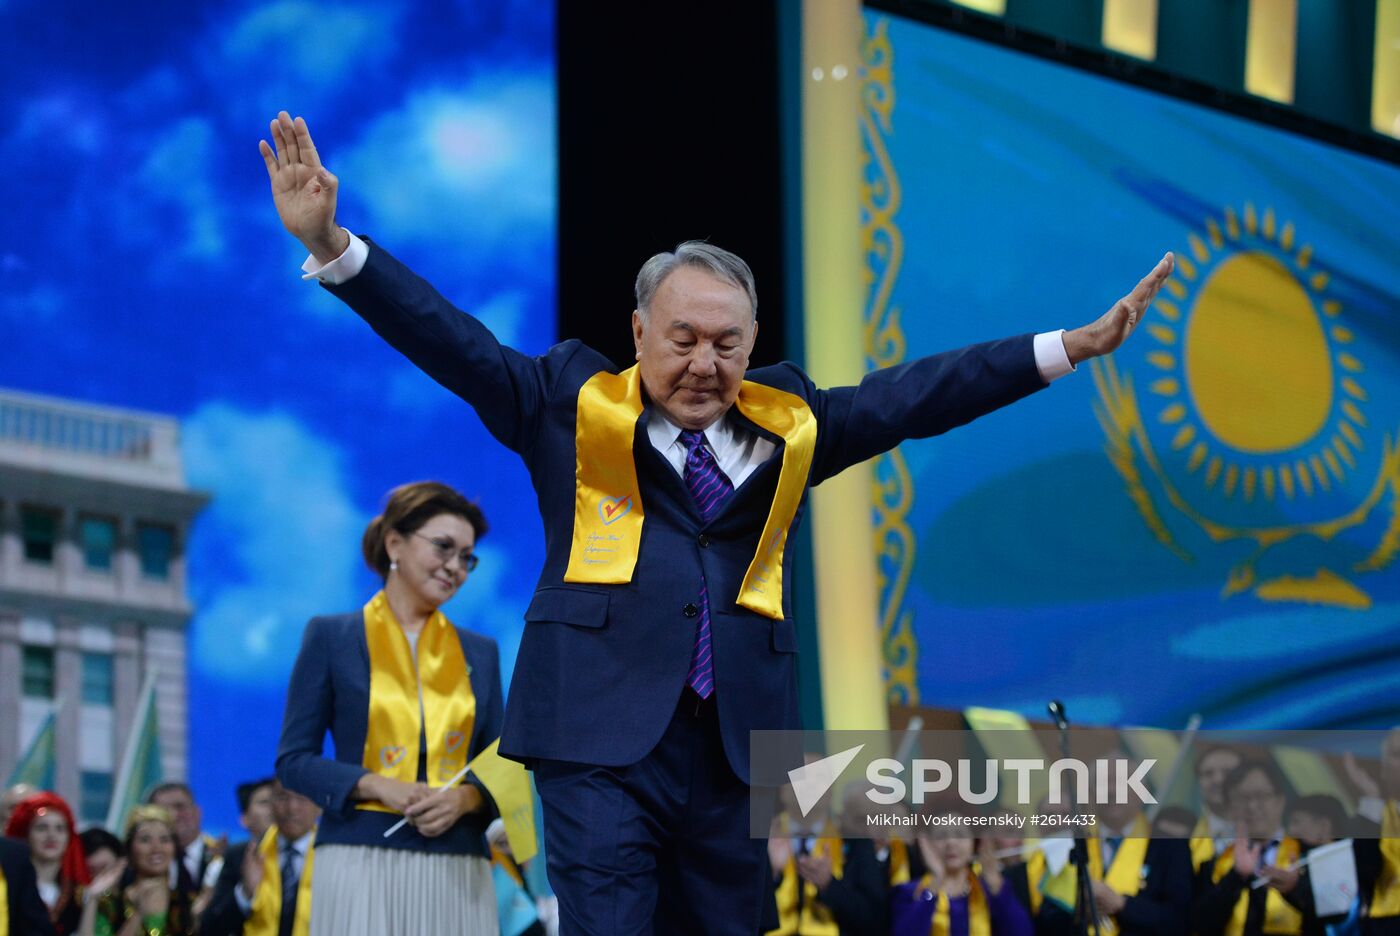 Presidential elections in Kazakhstan